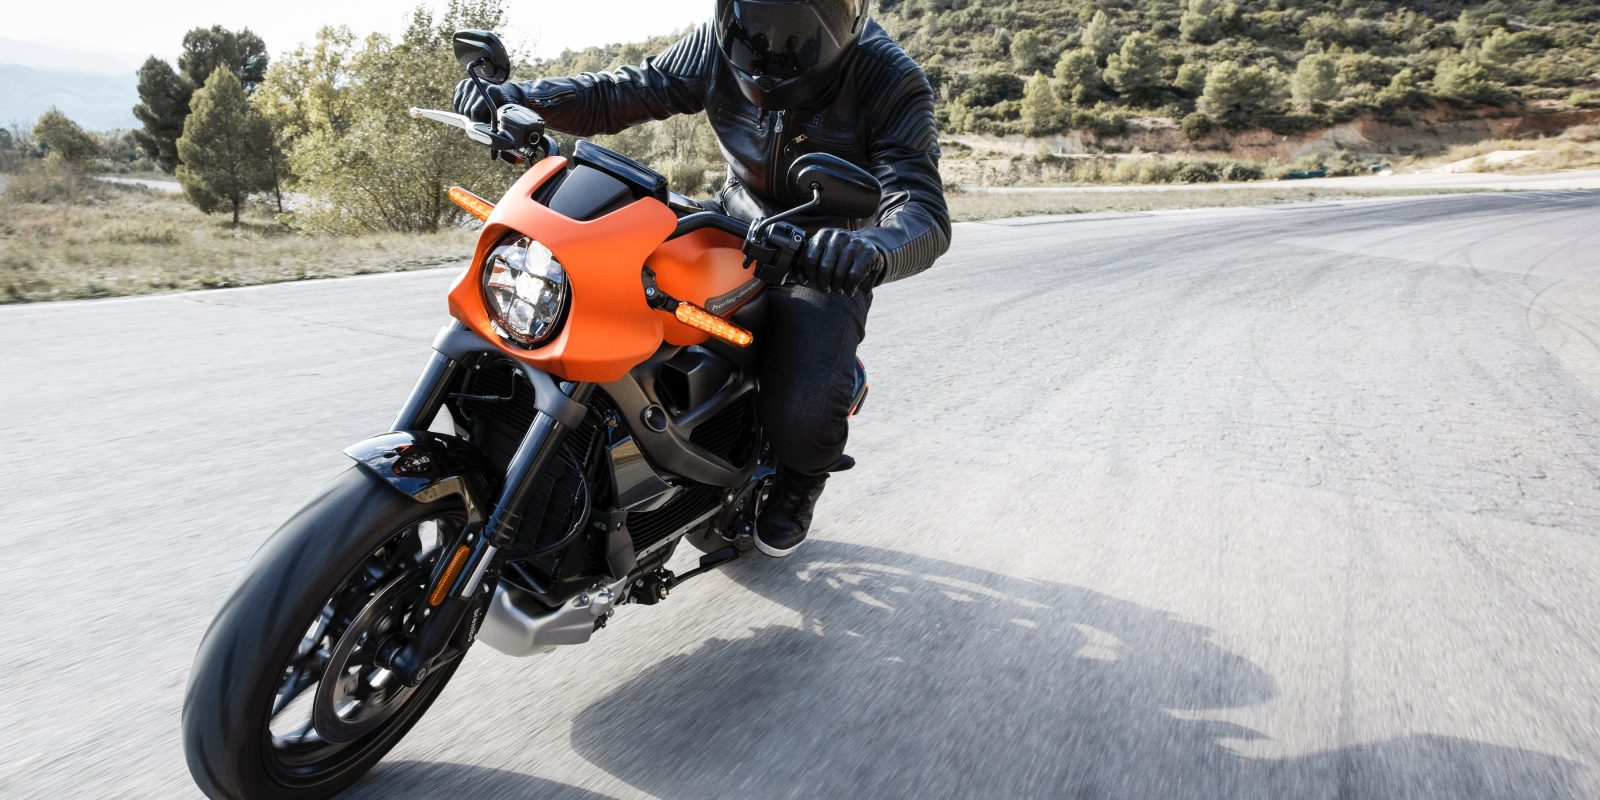 Harley Davidson Livewire Electric Motorcycle Shown Beating Range And Speed Ratings Electrek